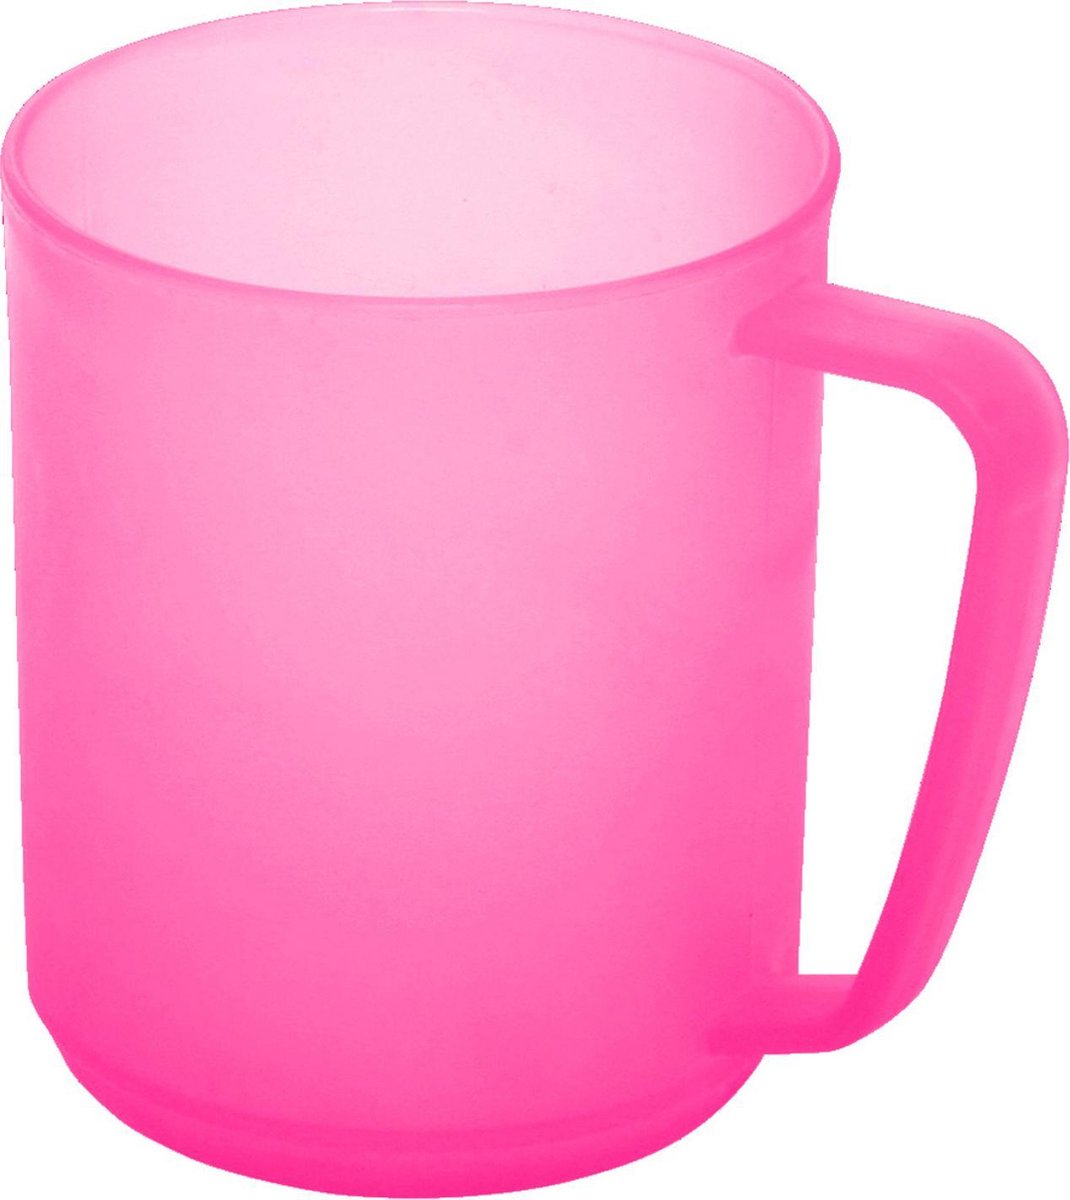 Activeren Oh jee Slovenië Plast Team Plastic beker uit Hawaii met transparante roze houder | bol.com